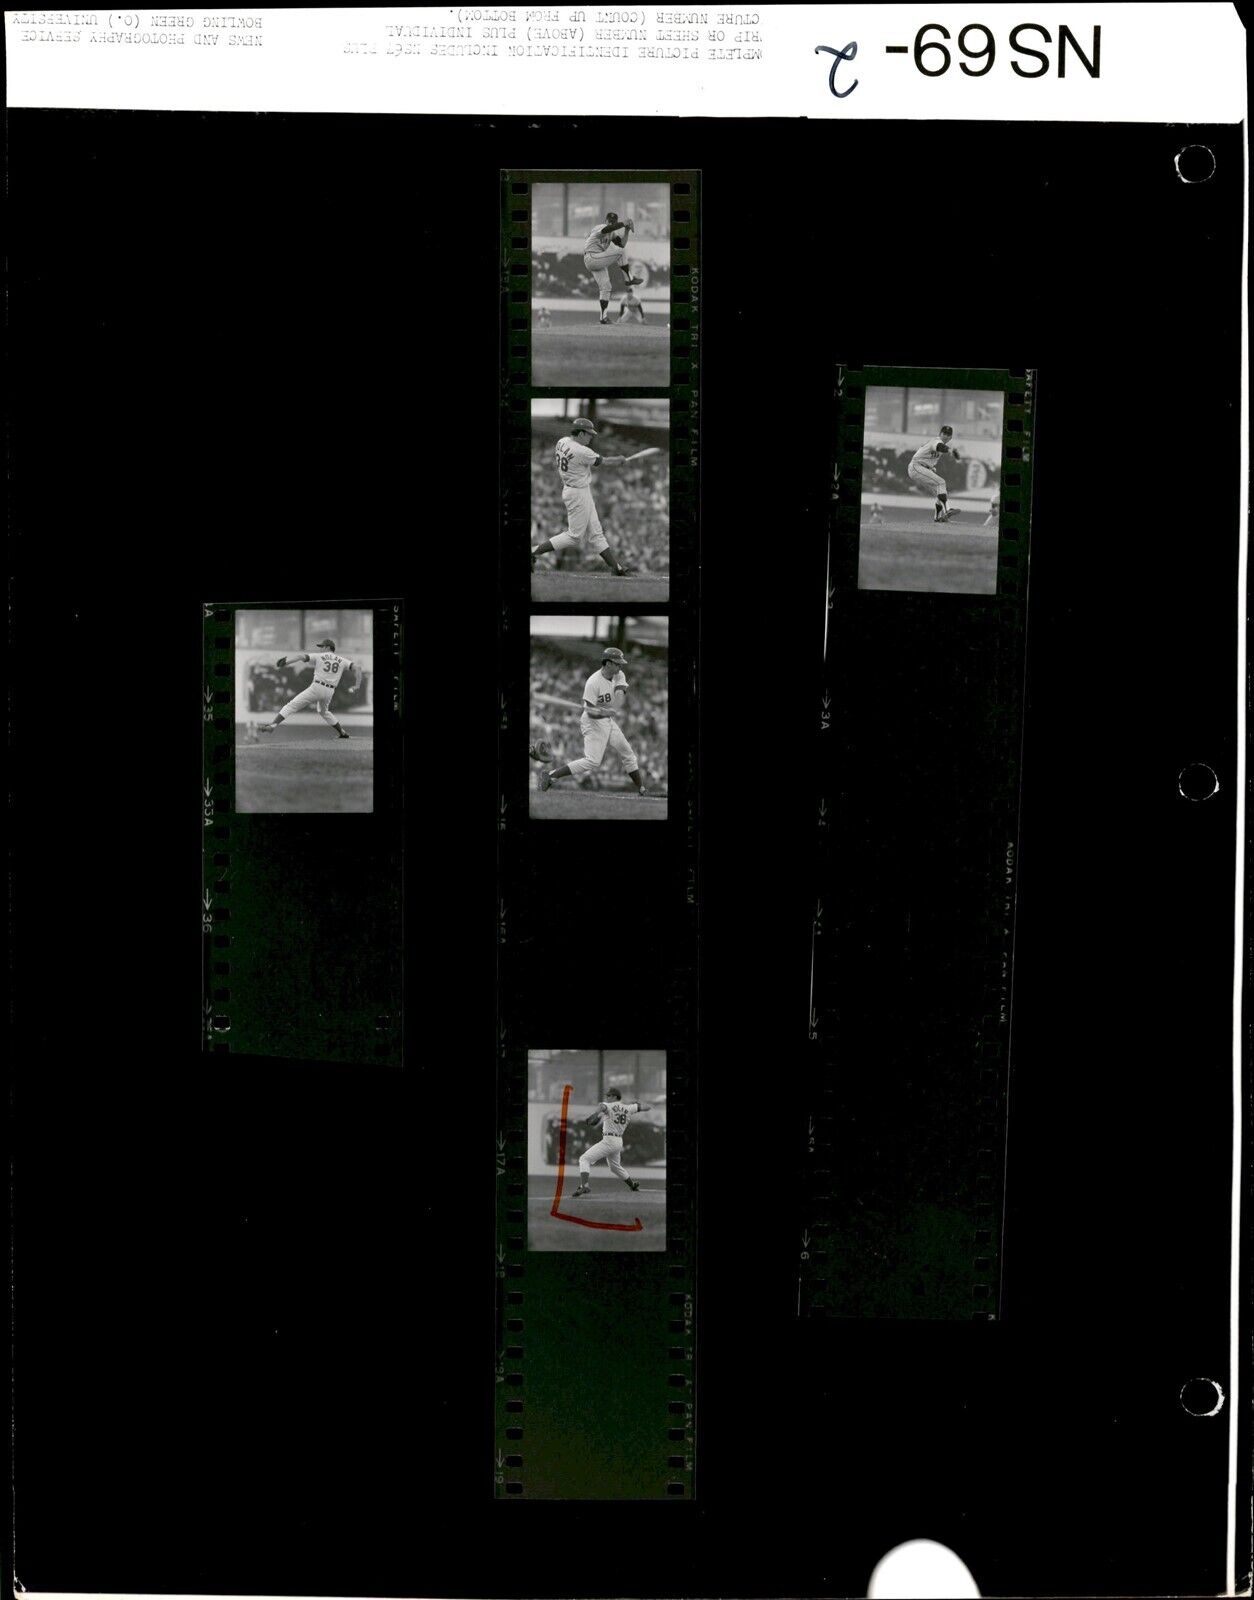 LD323 1970 Original Contact Sheet Photo GARY NOLAN CINCINNATI REDS v SF GIANTS